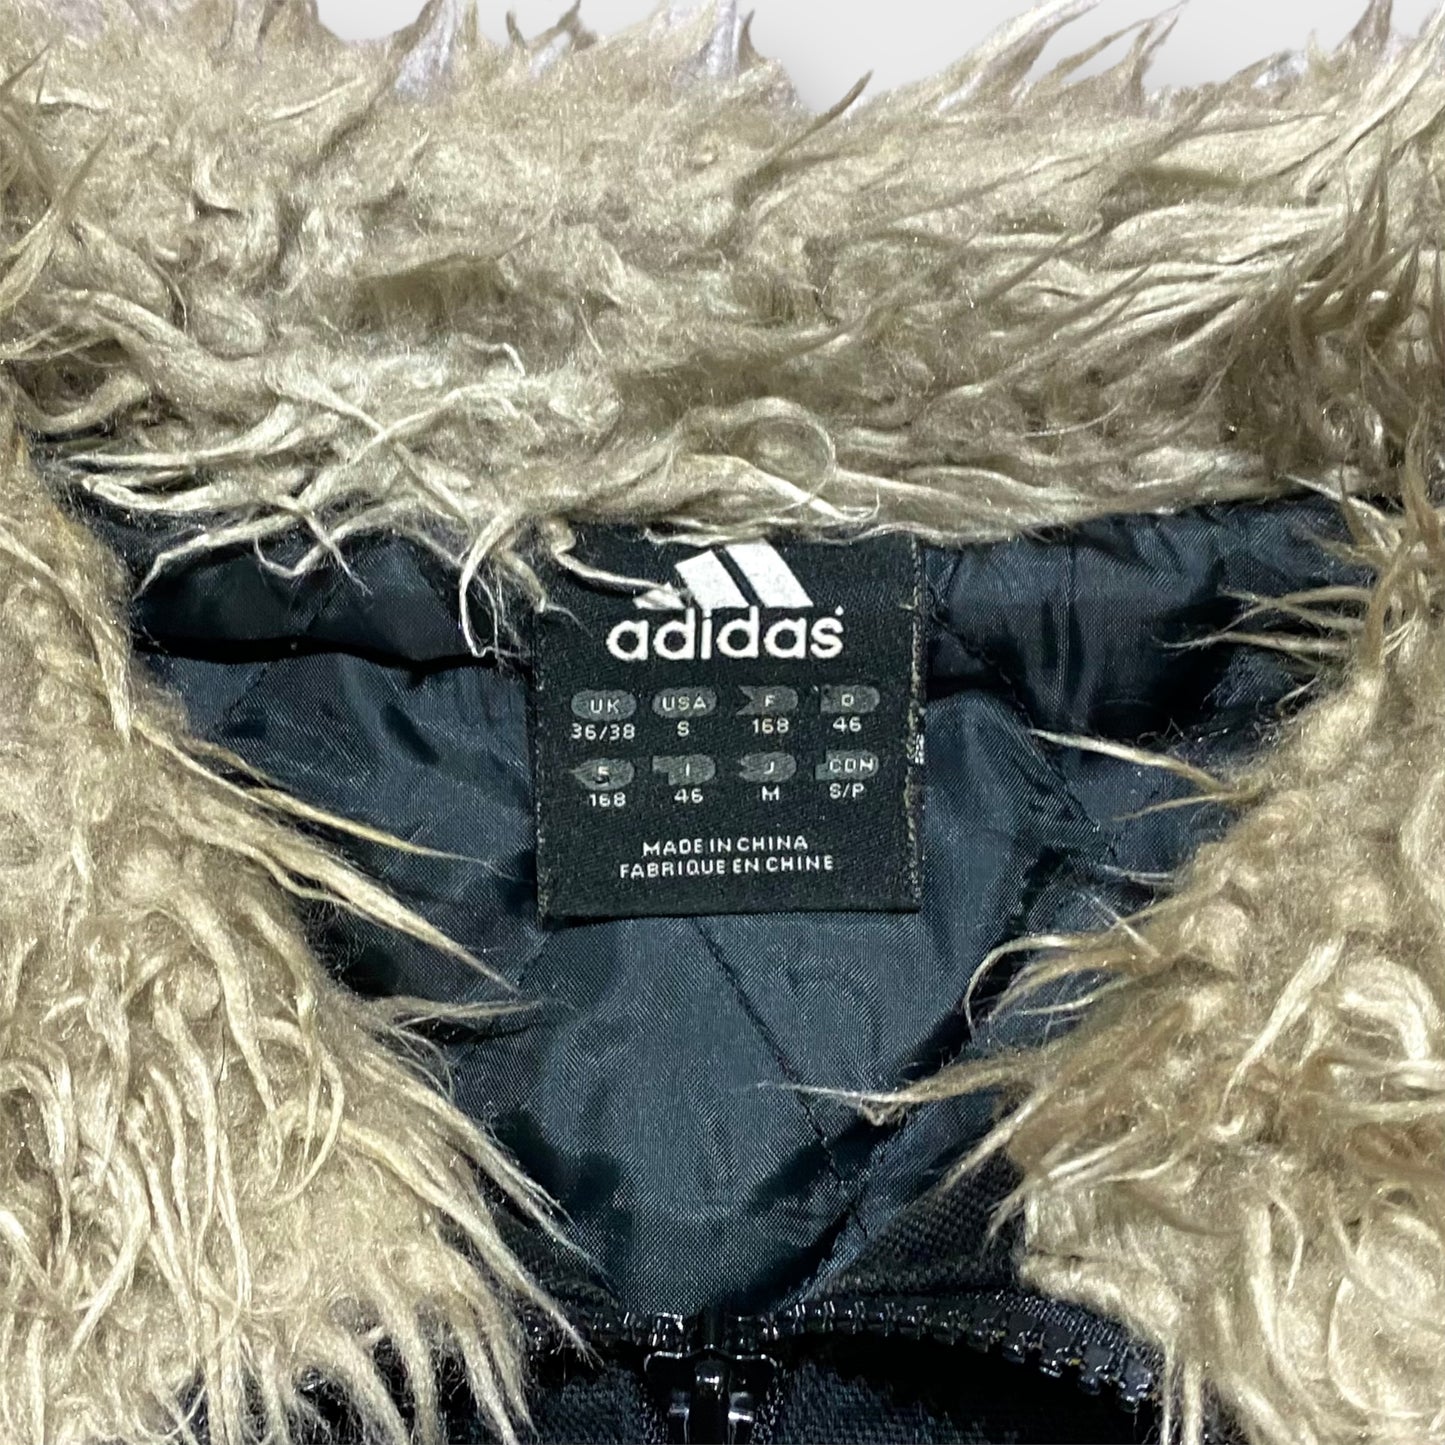 00's "adidas" B-3 type cotton jacket